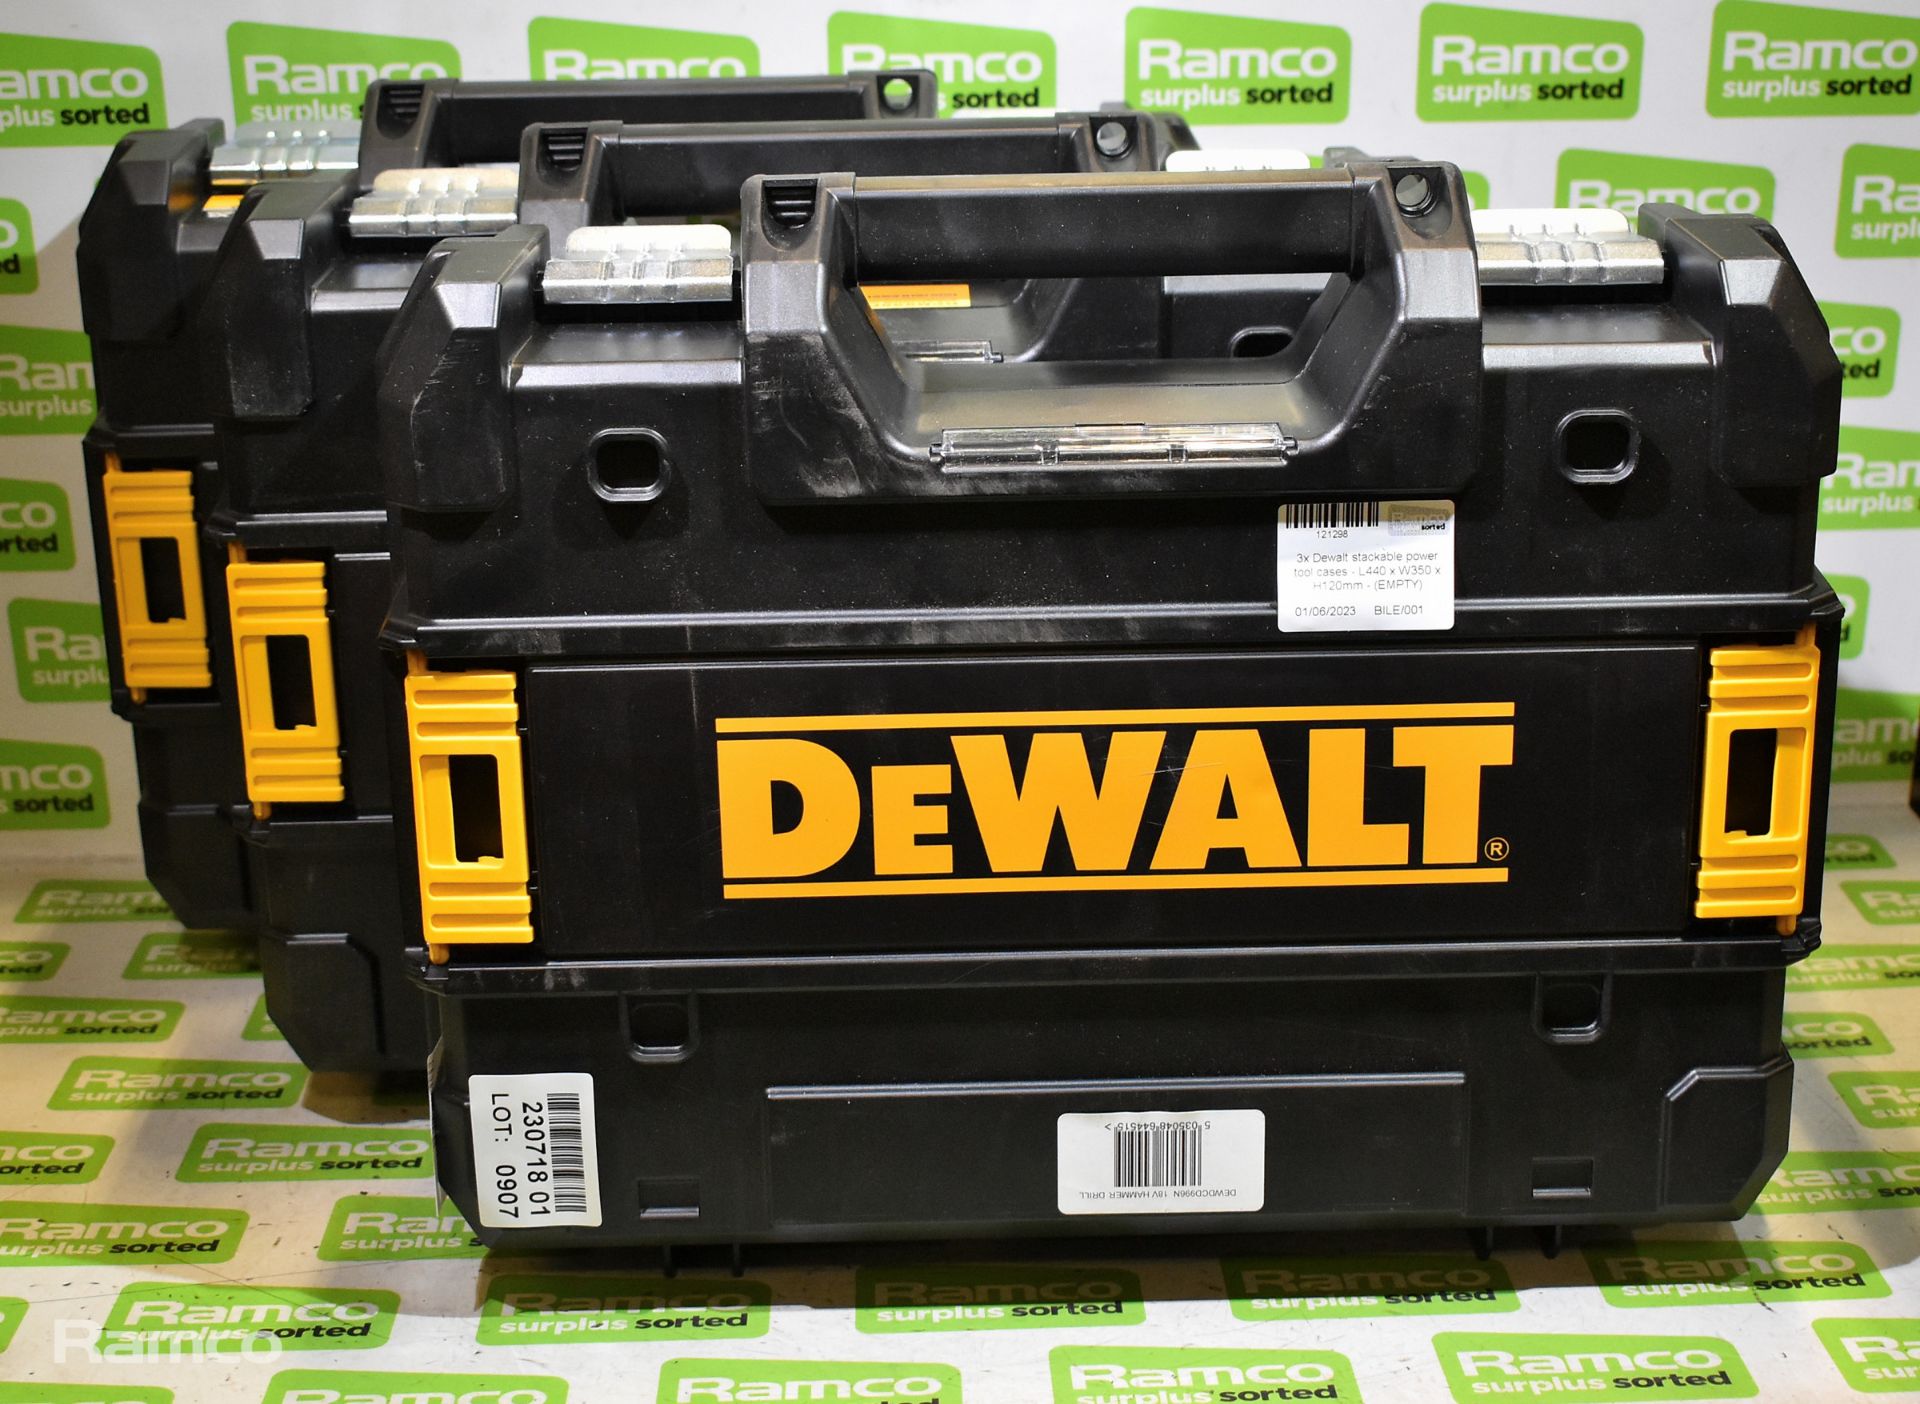 3x Dewalt stackable power tool cases - L440 x W350 x H120mm - (EMPTY)